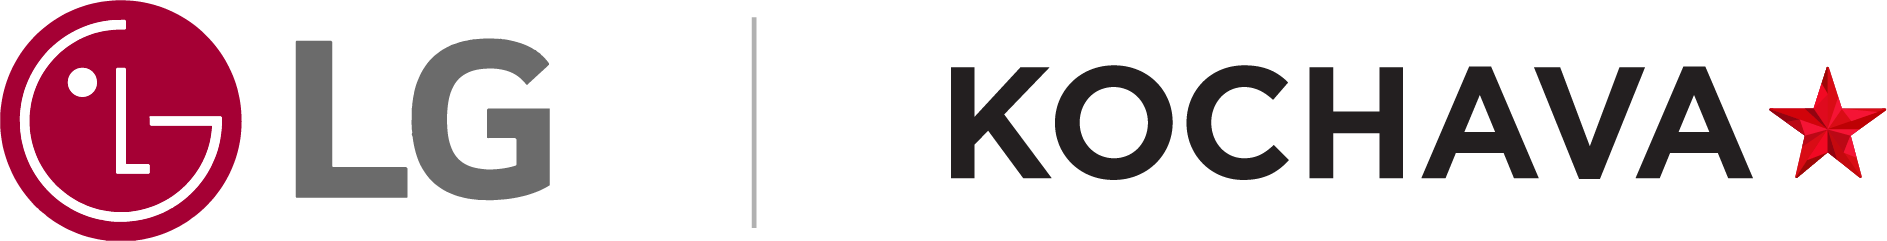 LG and Kochava logos